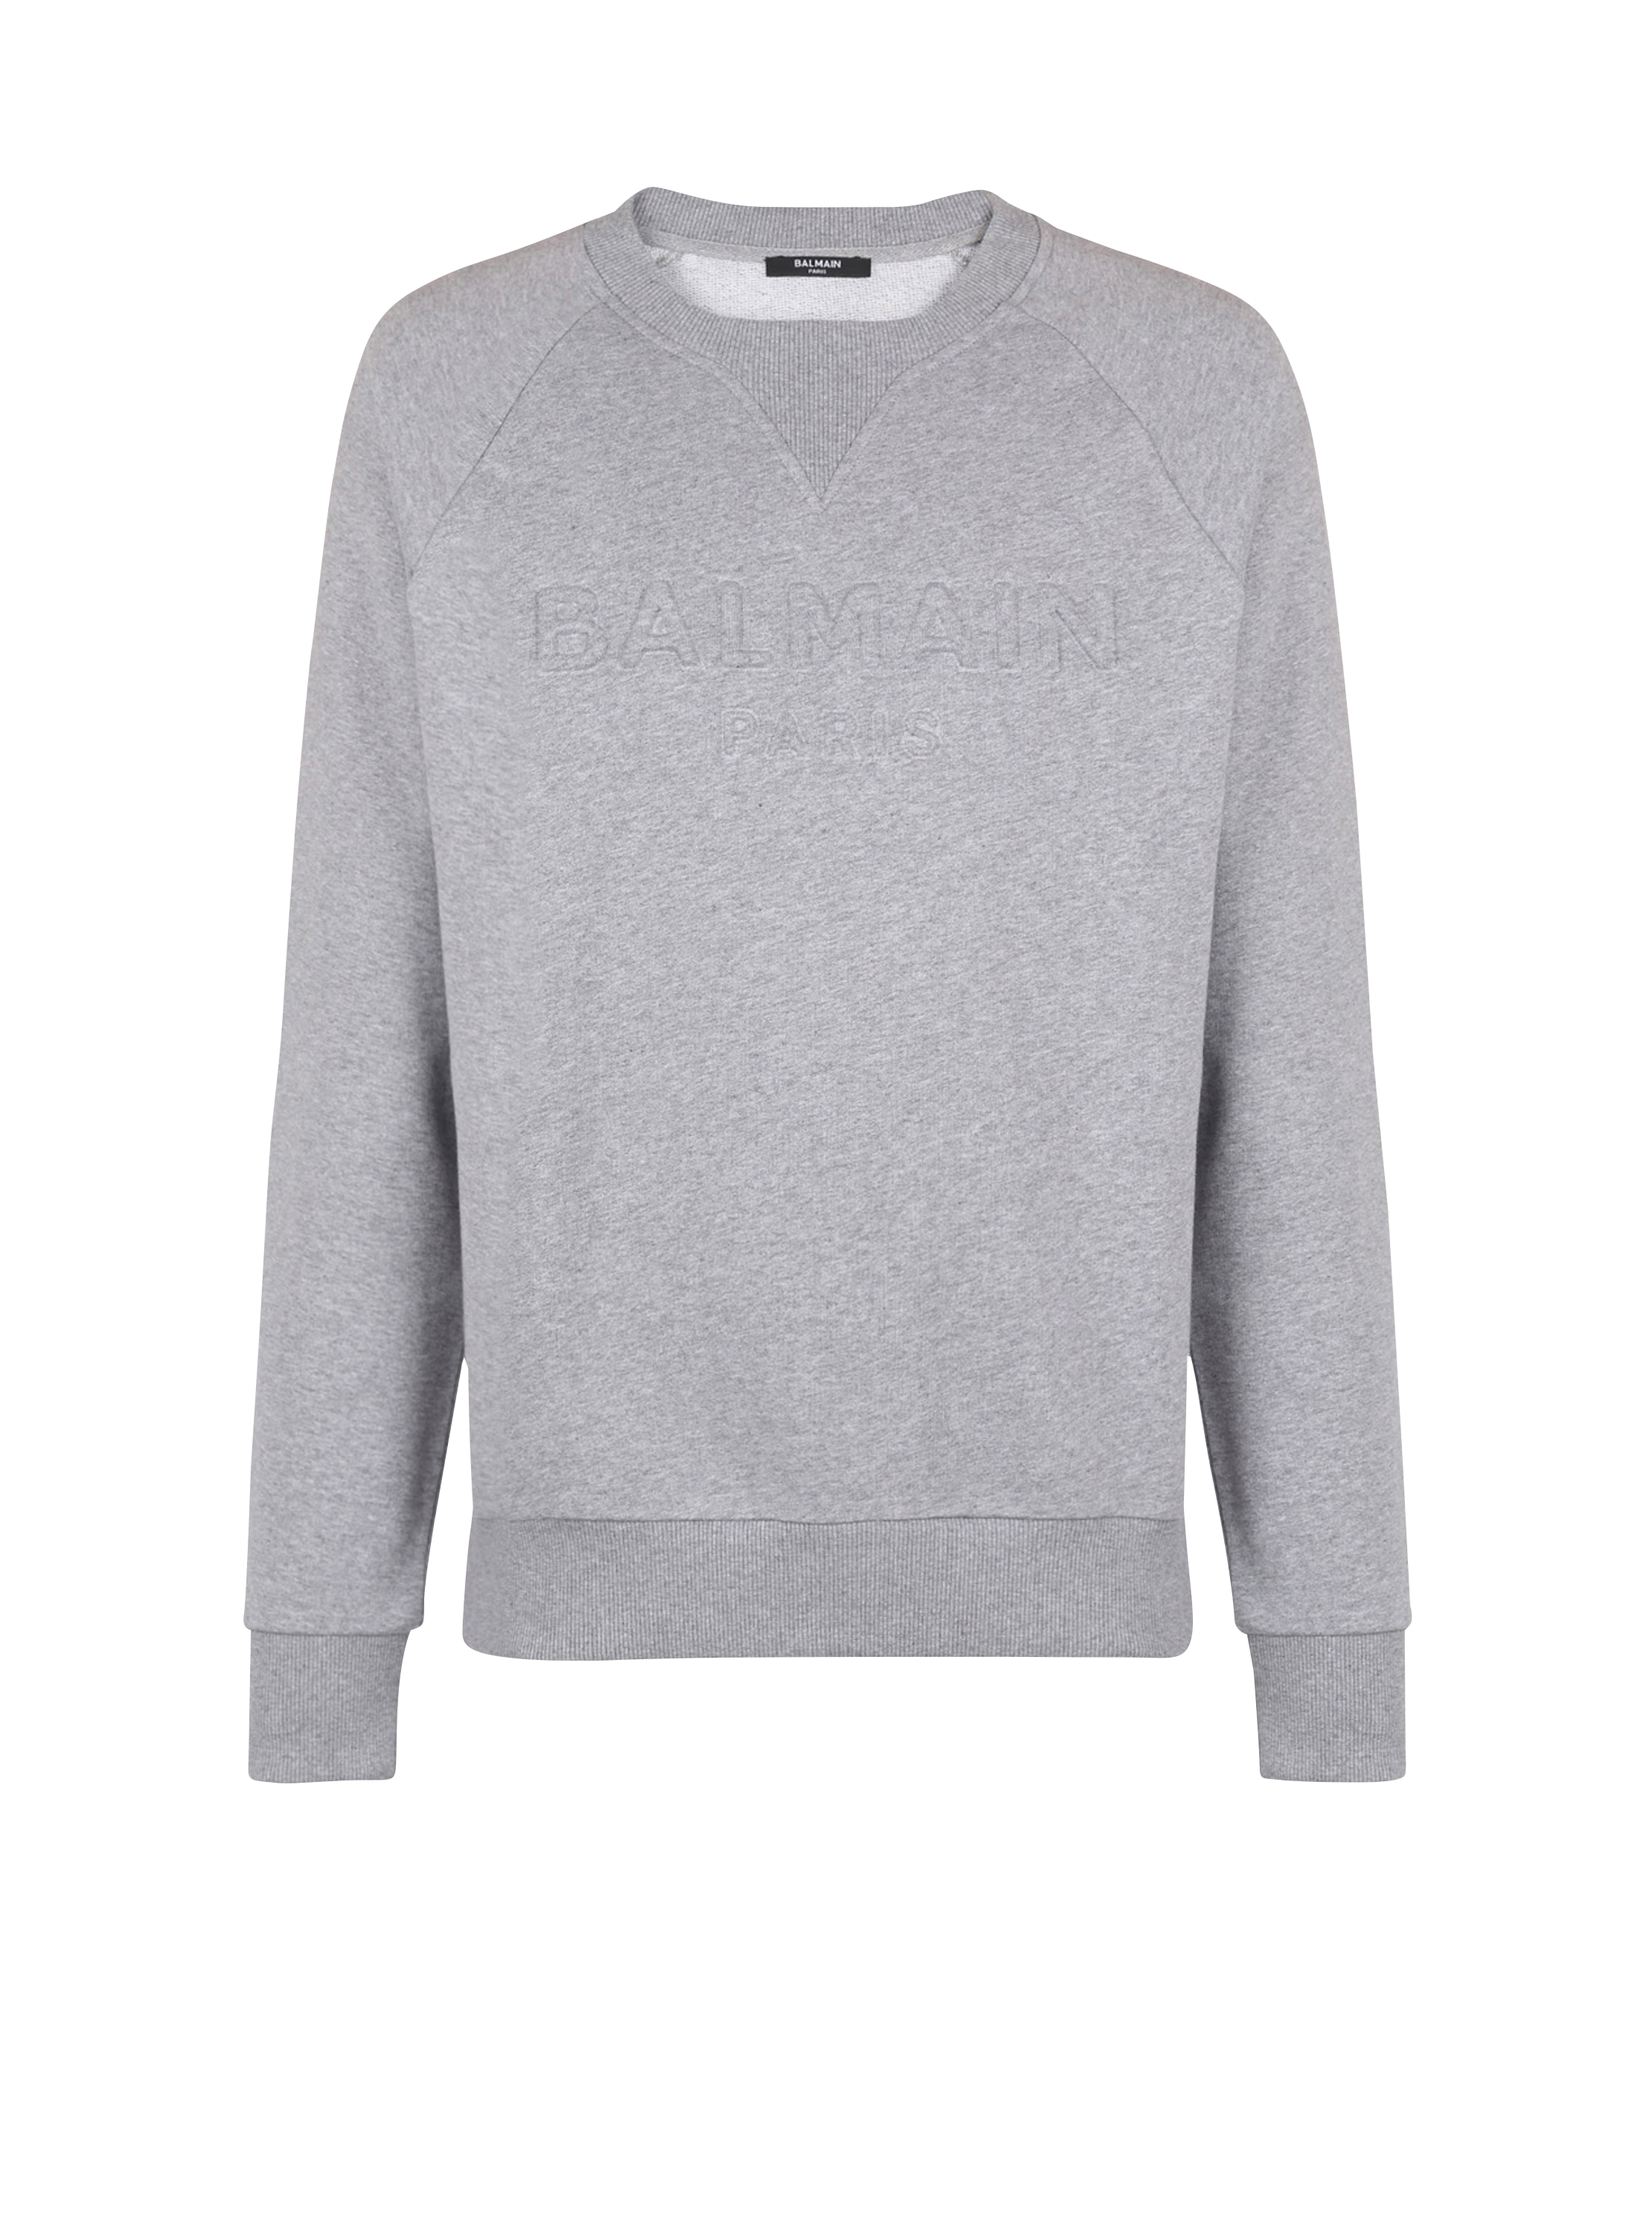 Cotton sweatshirt with embossed Balmain logo, grey, hi-res